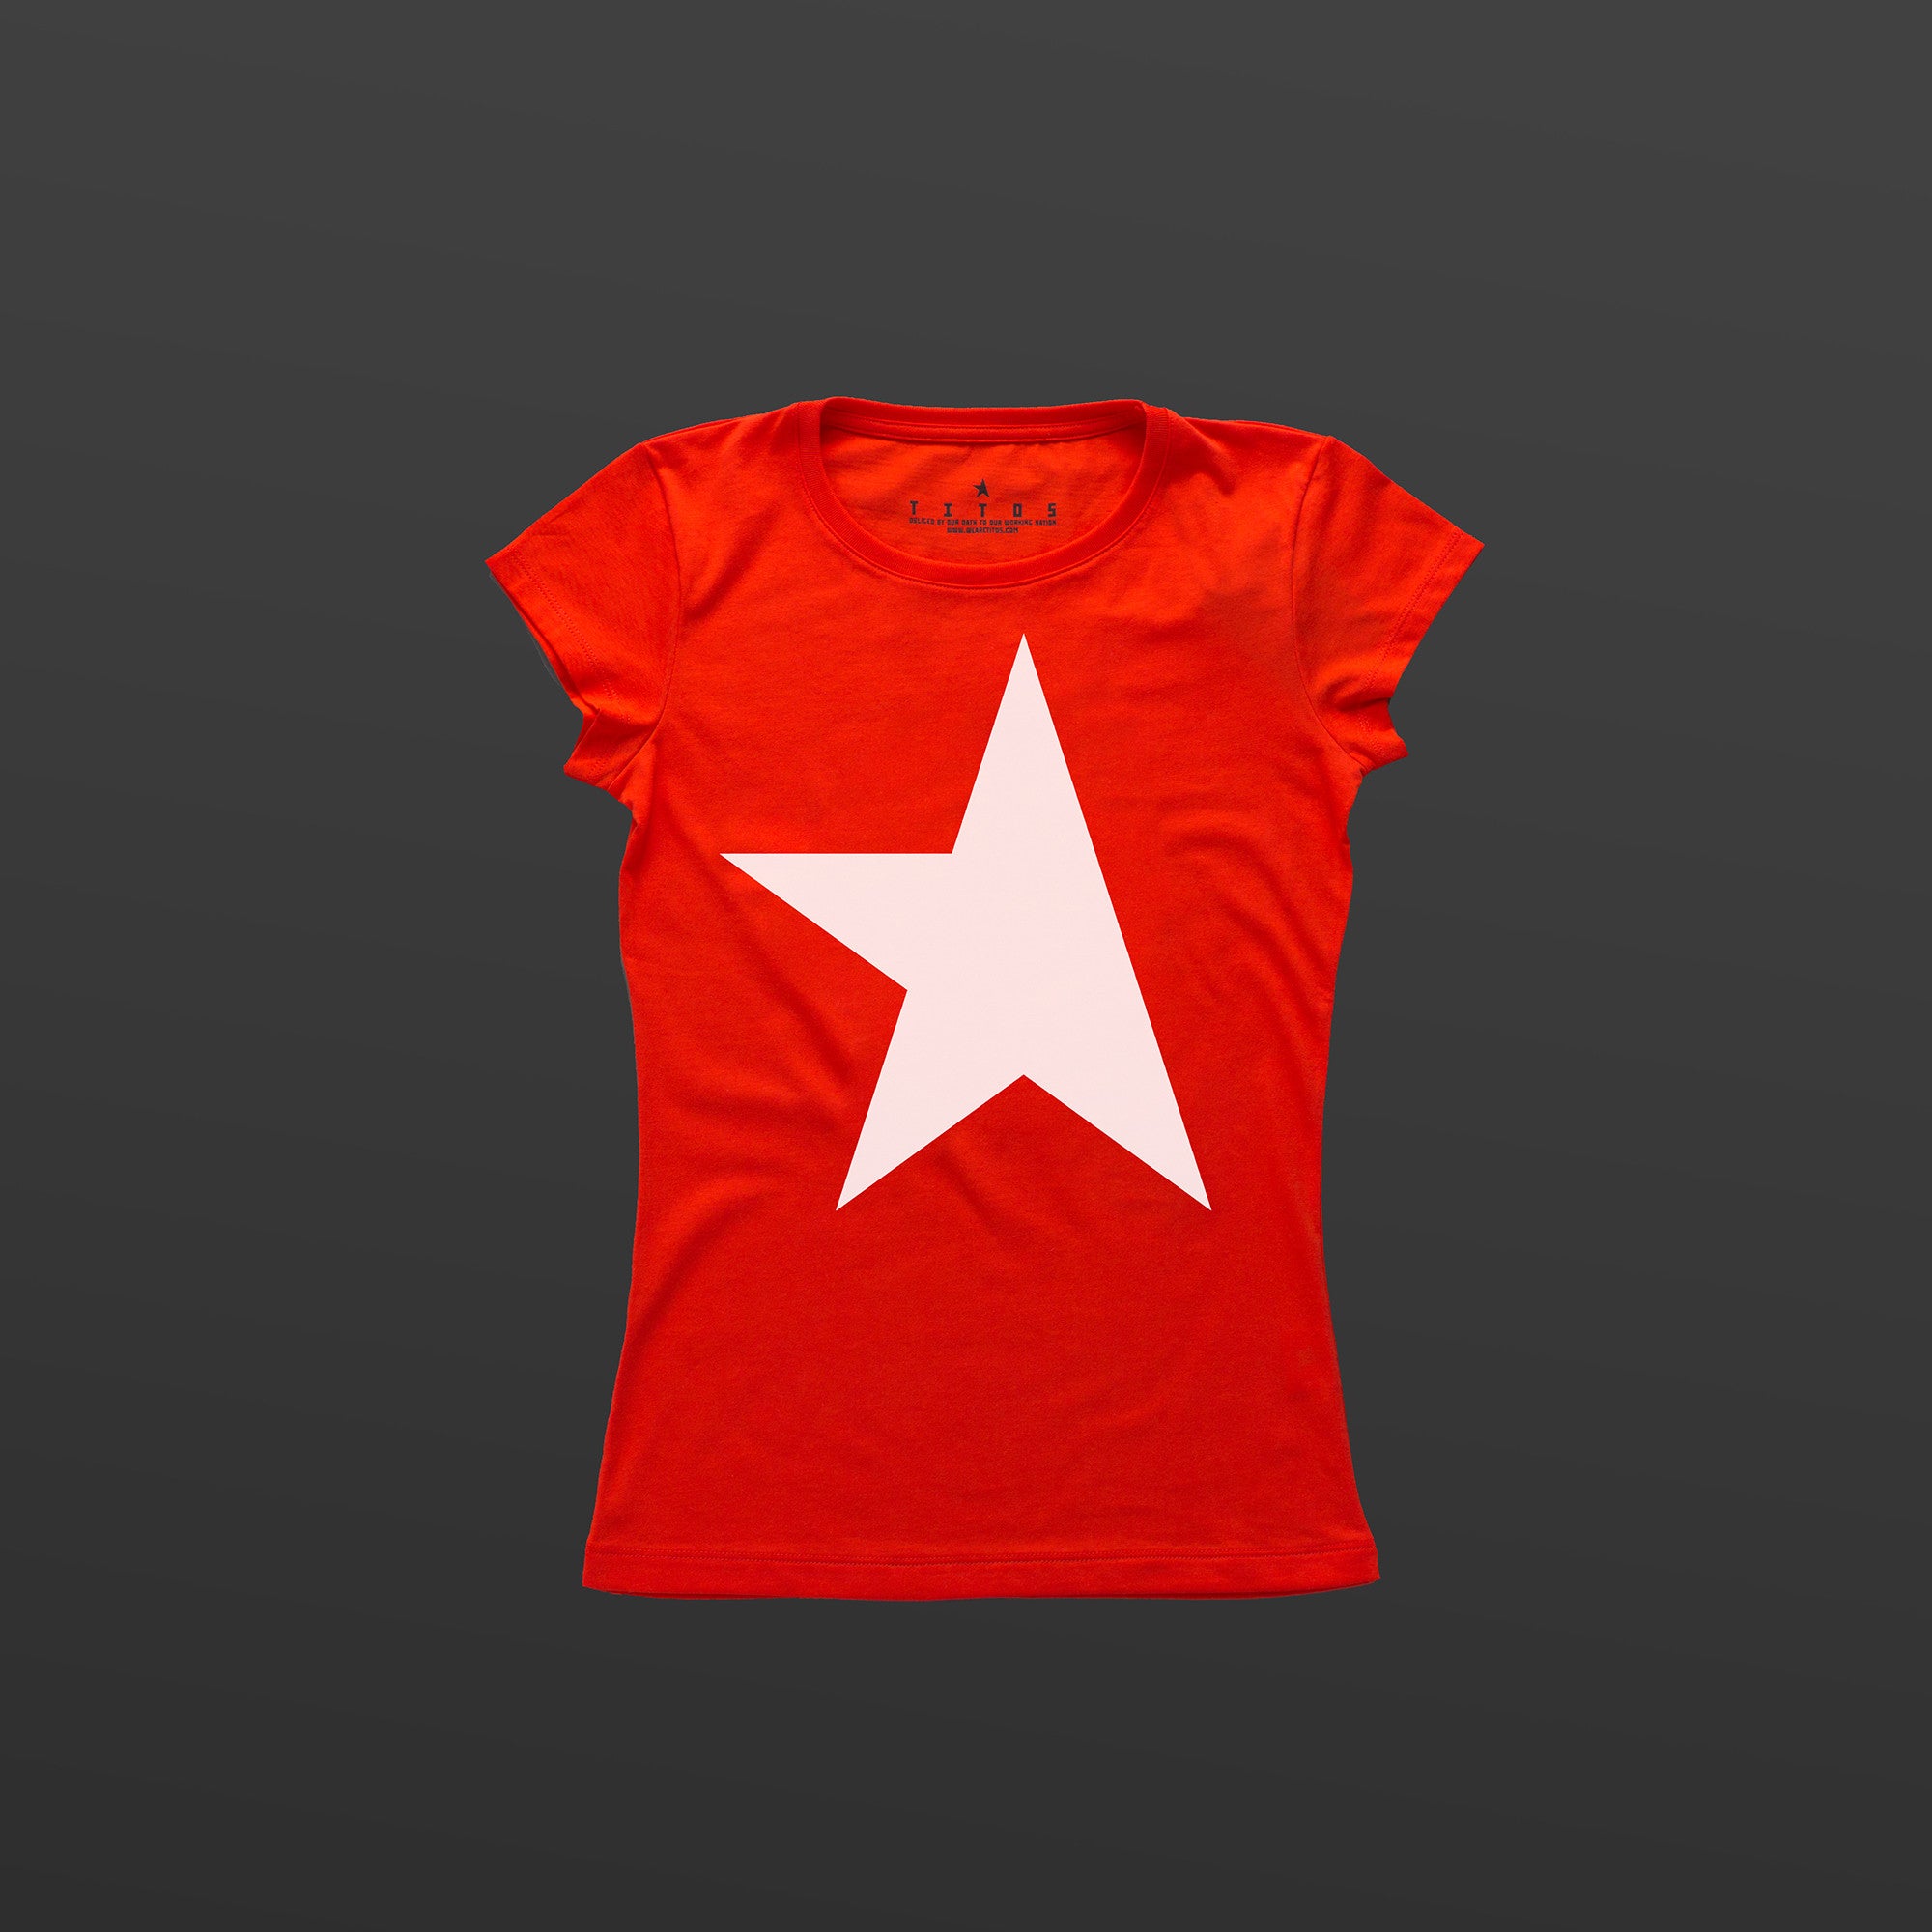 First women's T-shirt red/white TITOS star logo